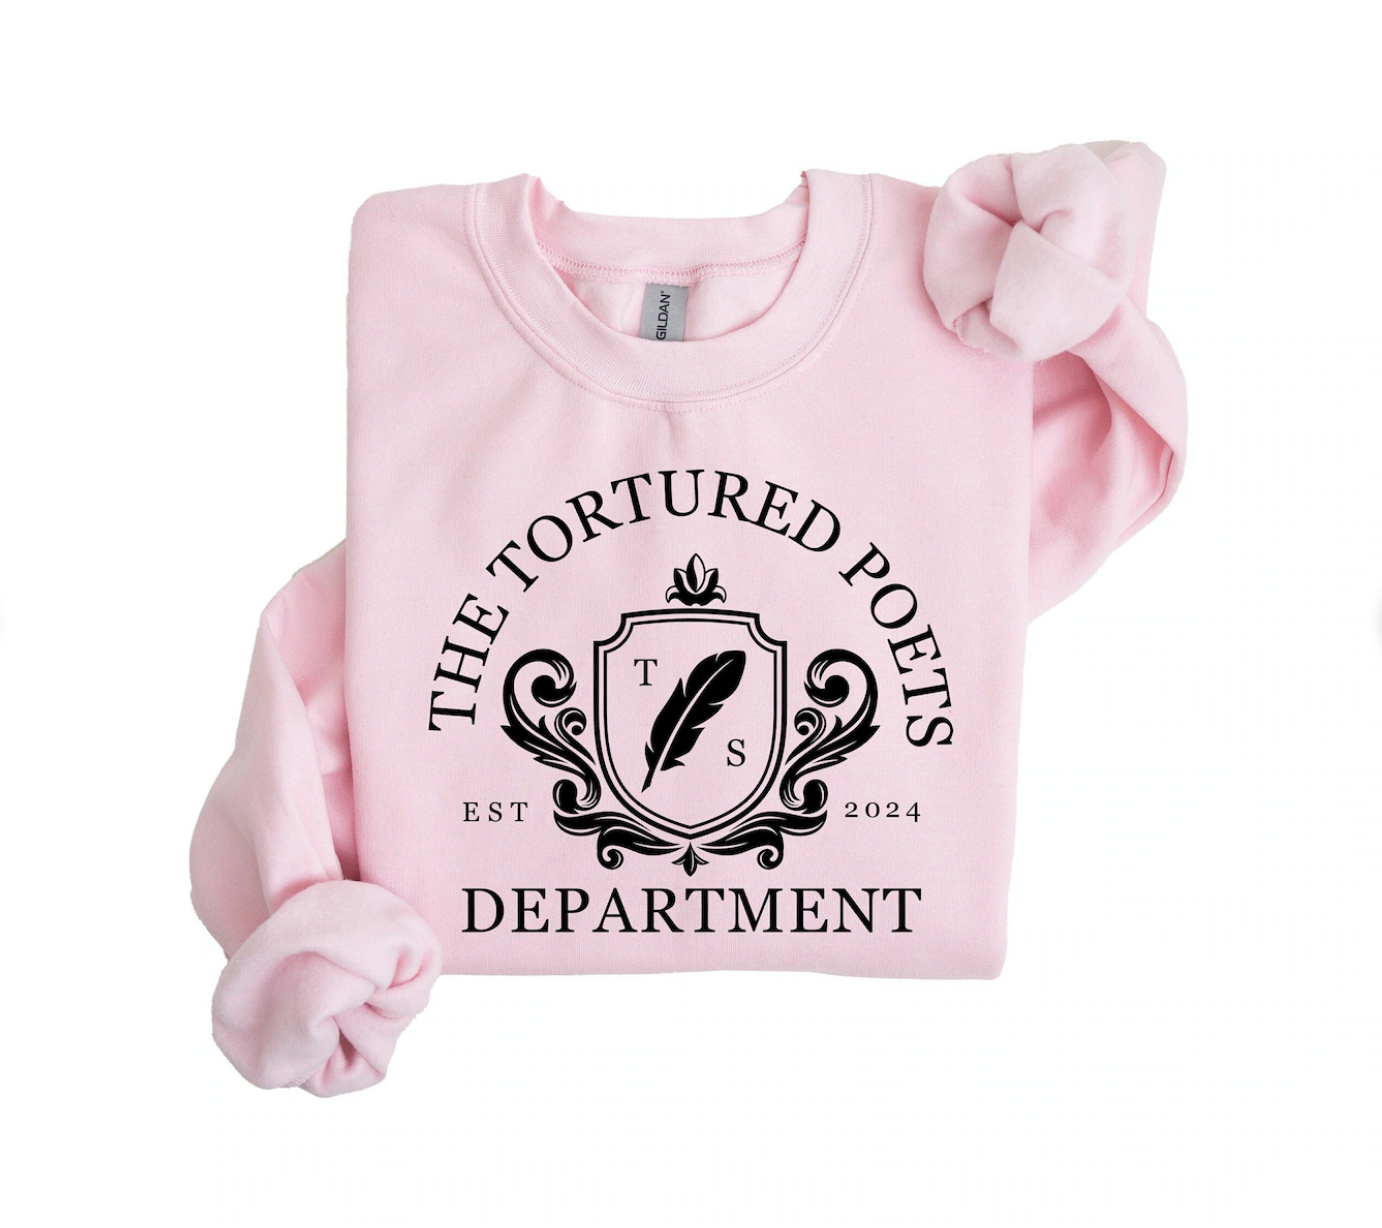 The Tortured Poets Department T-shirt Sweatshirt Hoodie